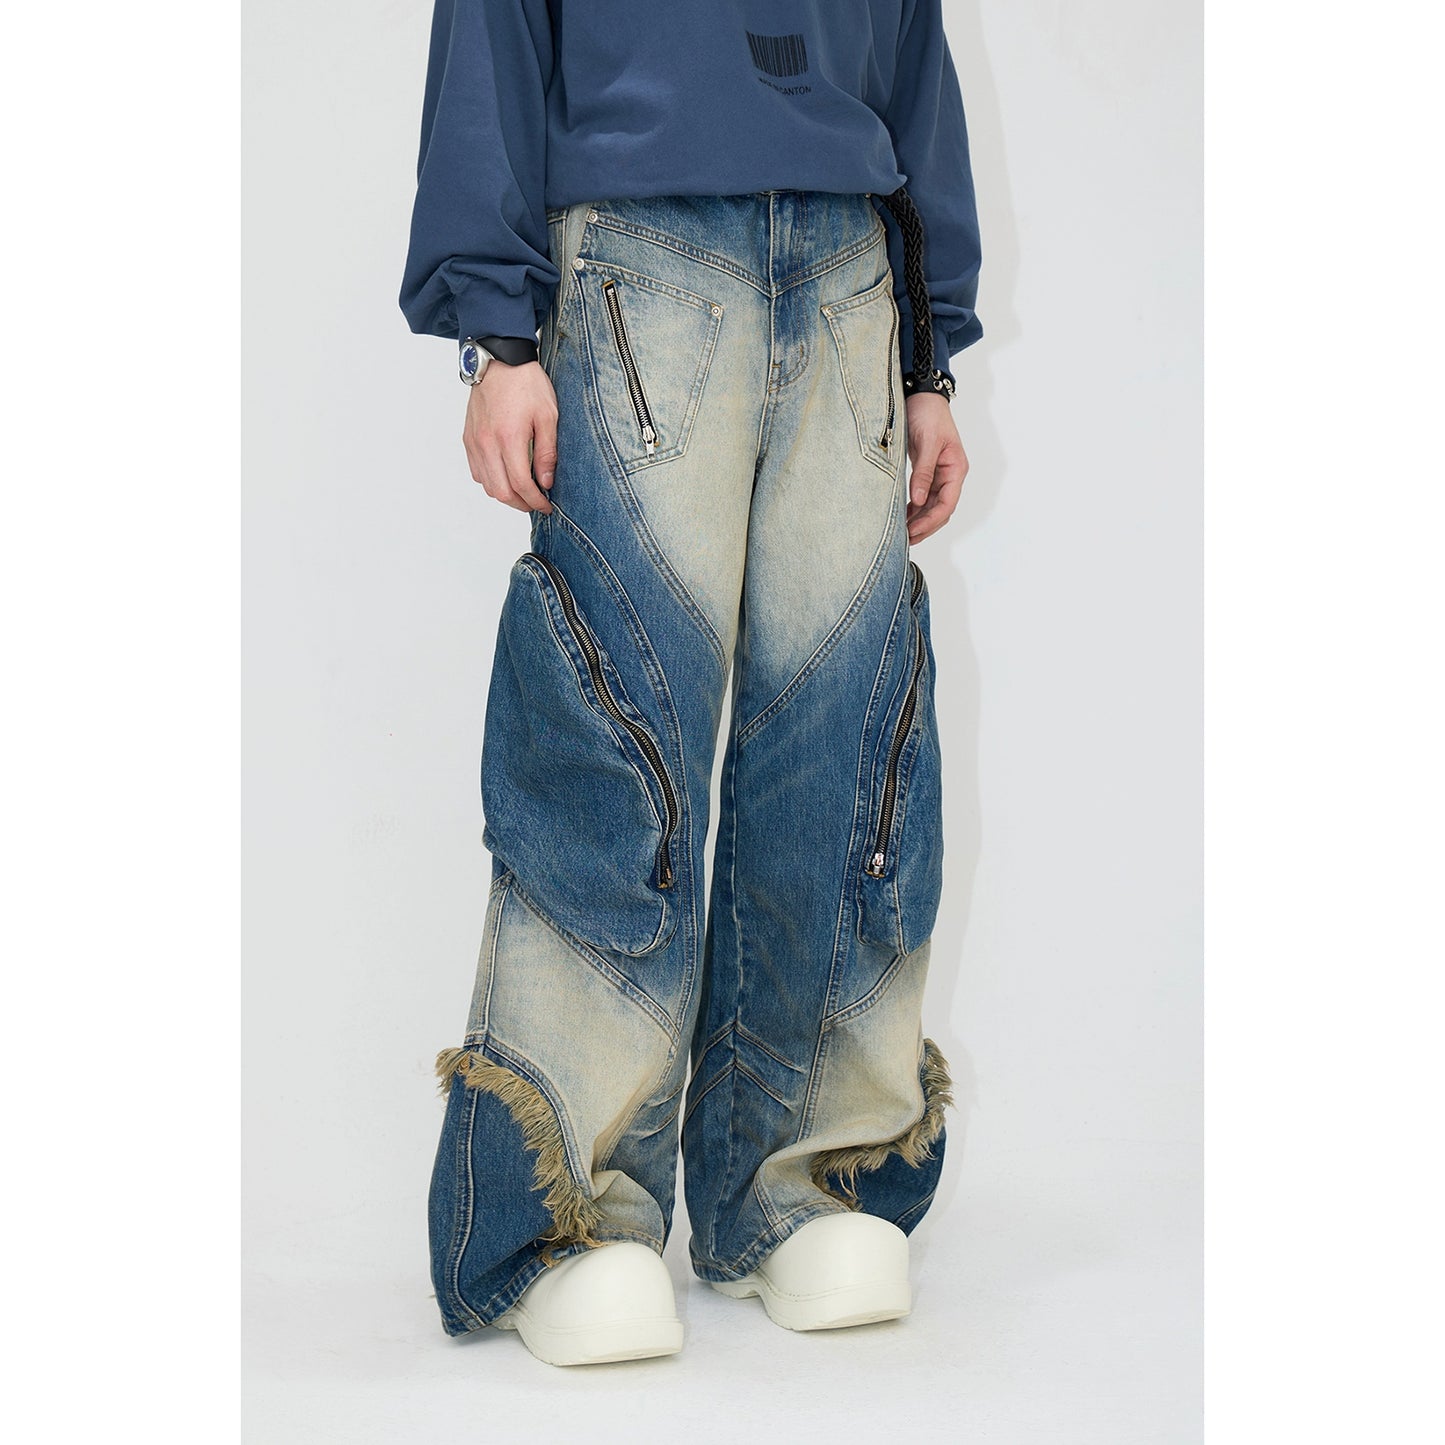 Jeans interstellare irregolare -jeans da lavoro pesanti pesanti